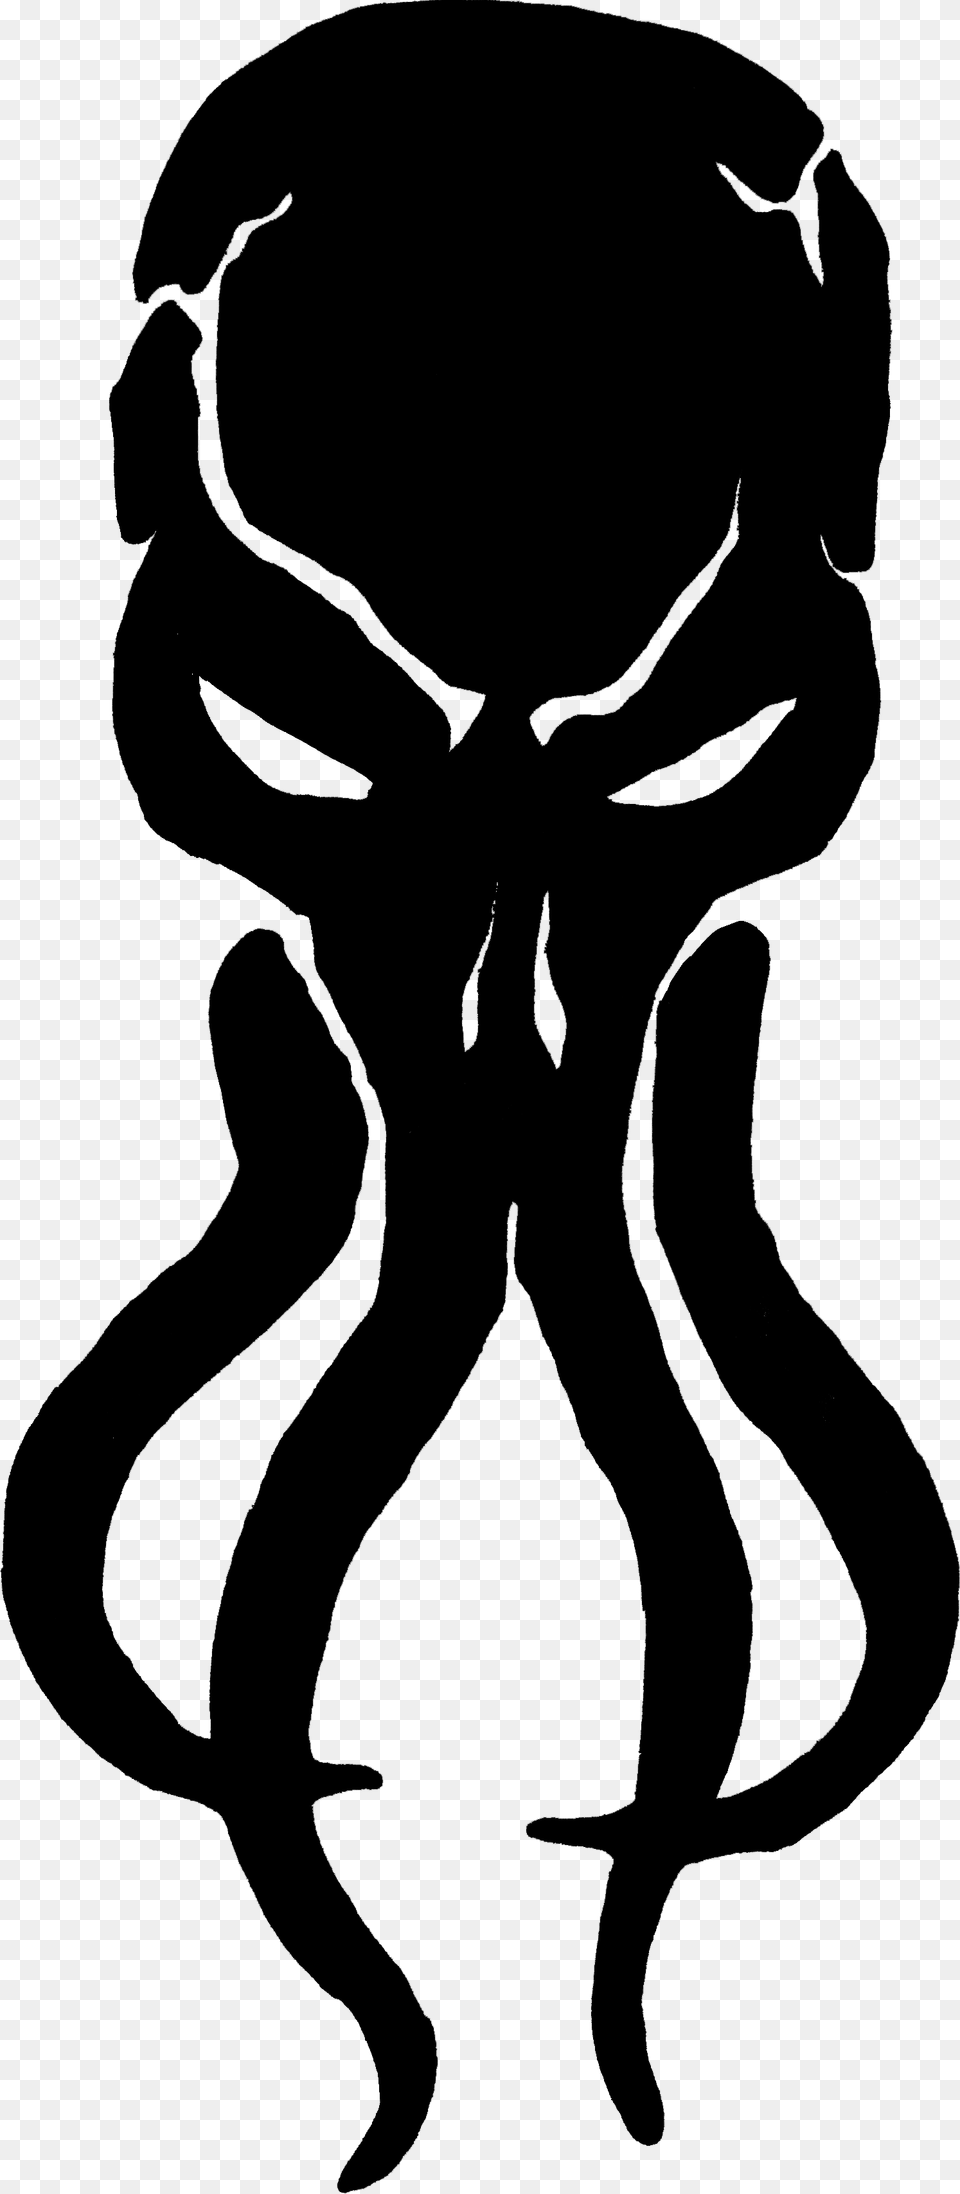 Logo Kraken Desktop Wallpaper Kraken Symbol, Silhouette, Stencil, Baby, Person Free Png Download